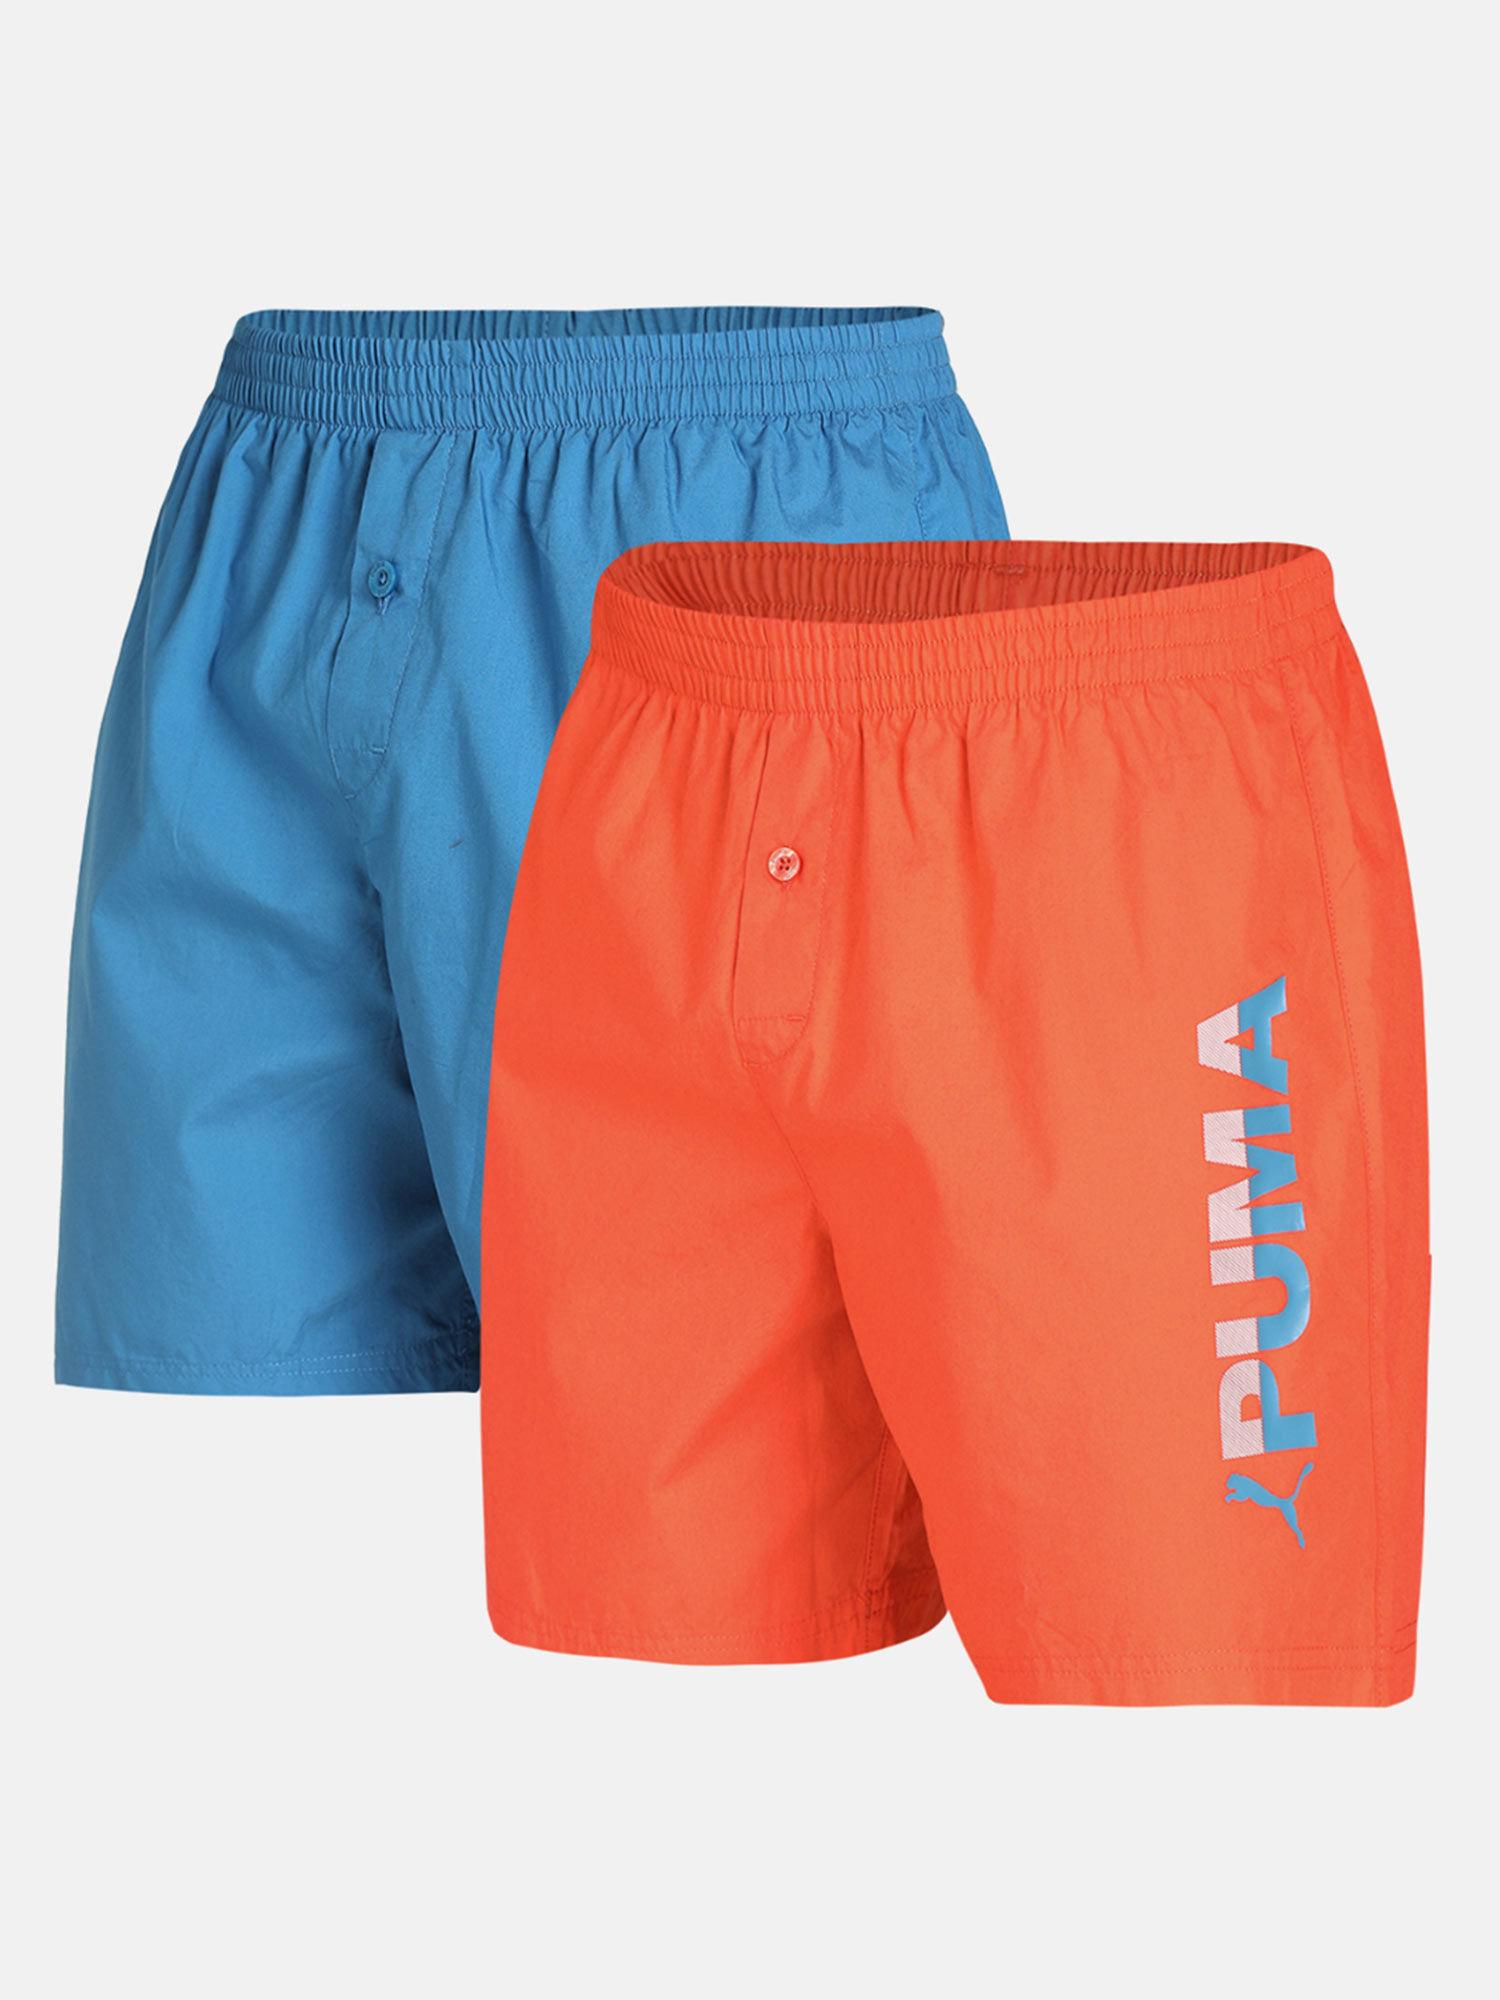 basic woven orange & blue boxers (pack of 2)